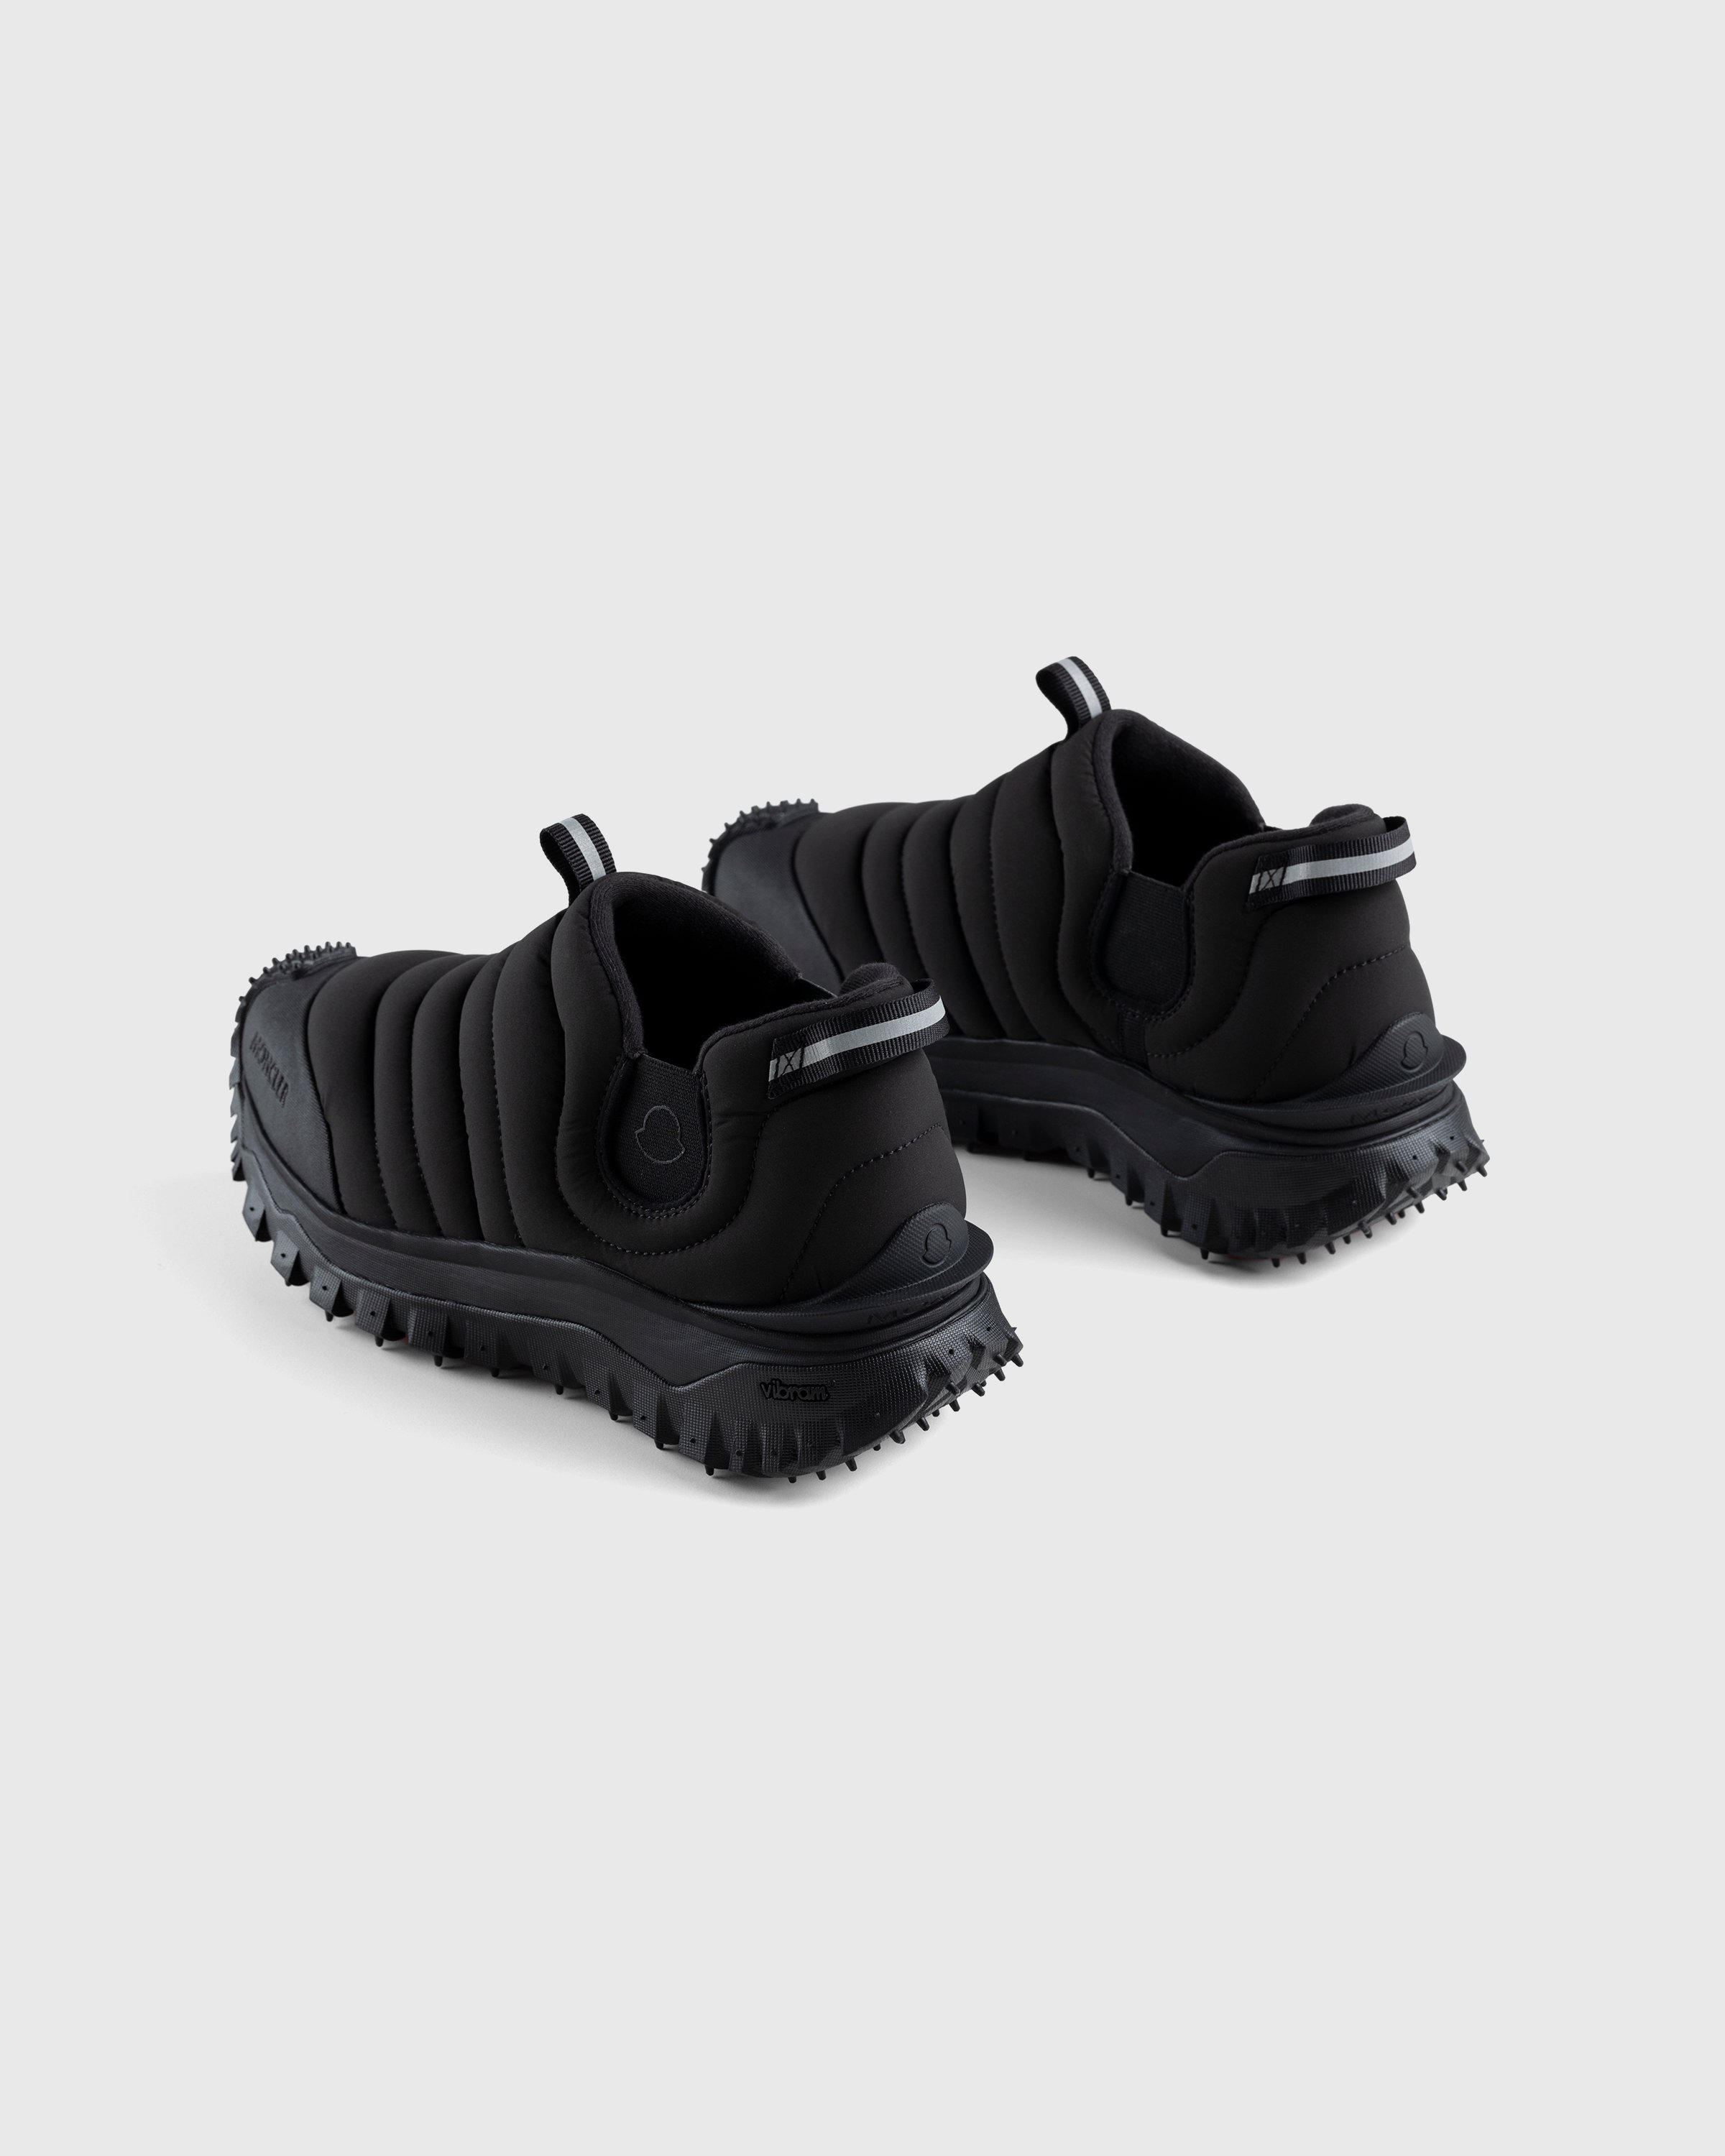 Moncler - Après Trail Sneakers Black - Footwear - Black - Image 4